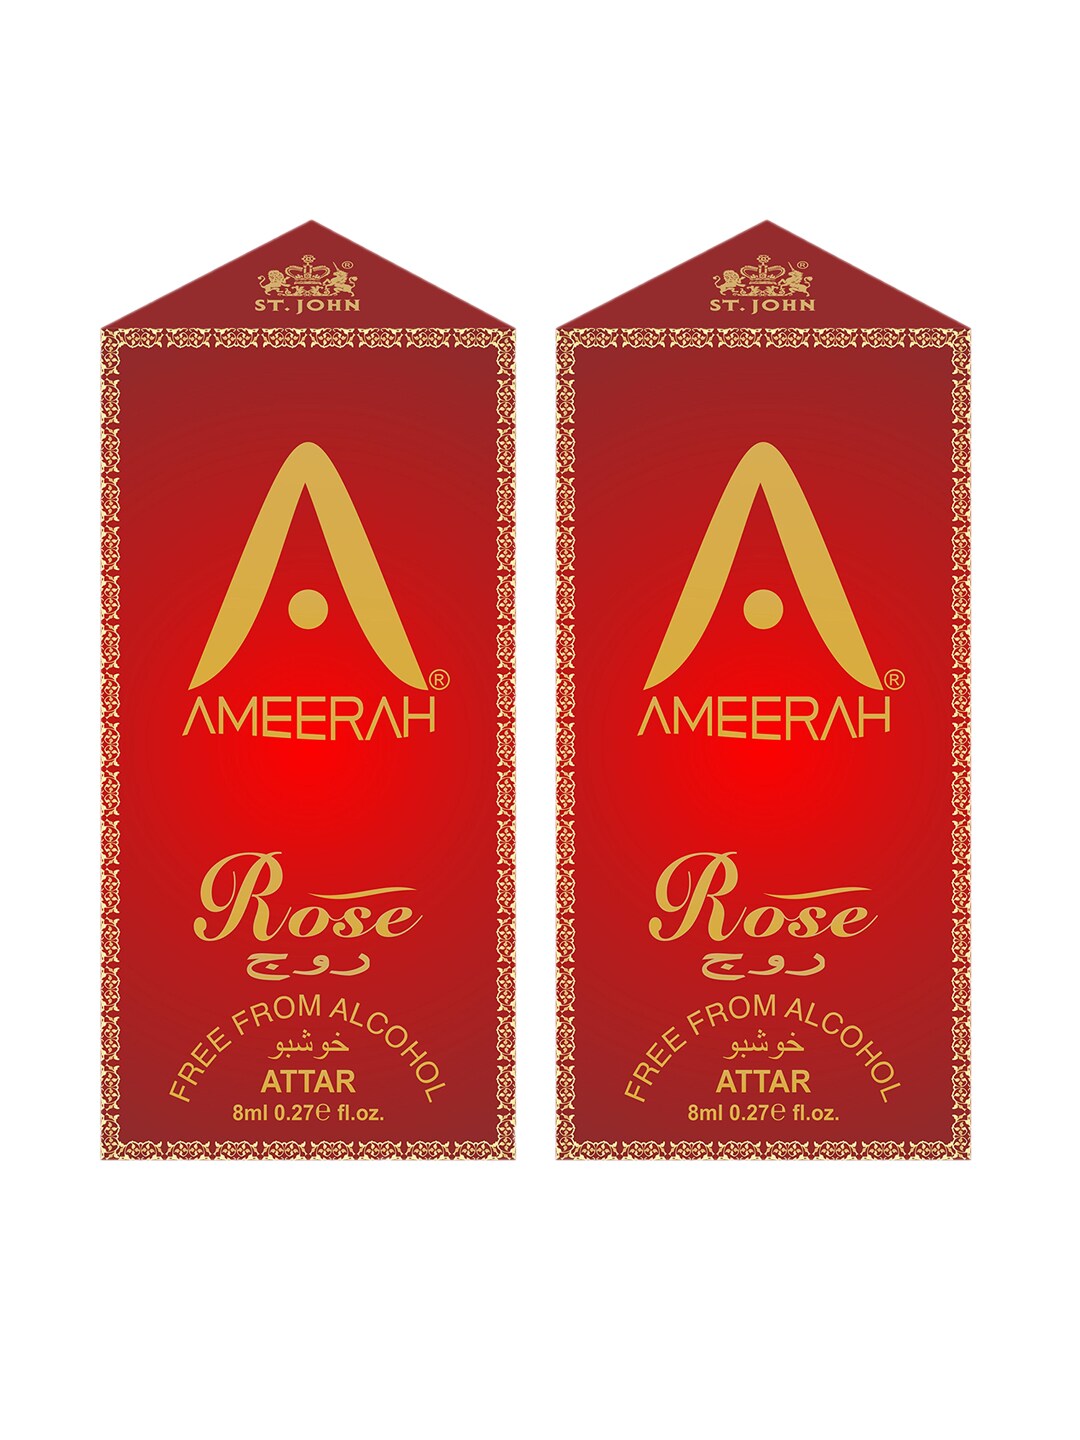 St. John Set of 2 Ameerah Rose Attar - 8 ml Each Price in India